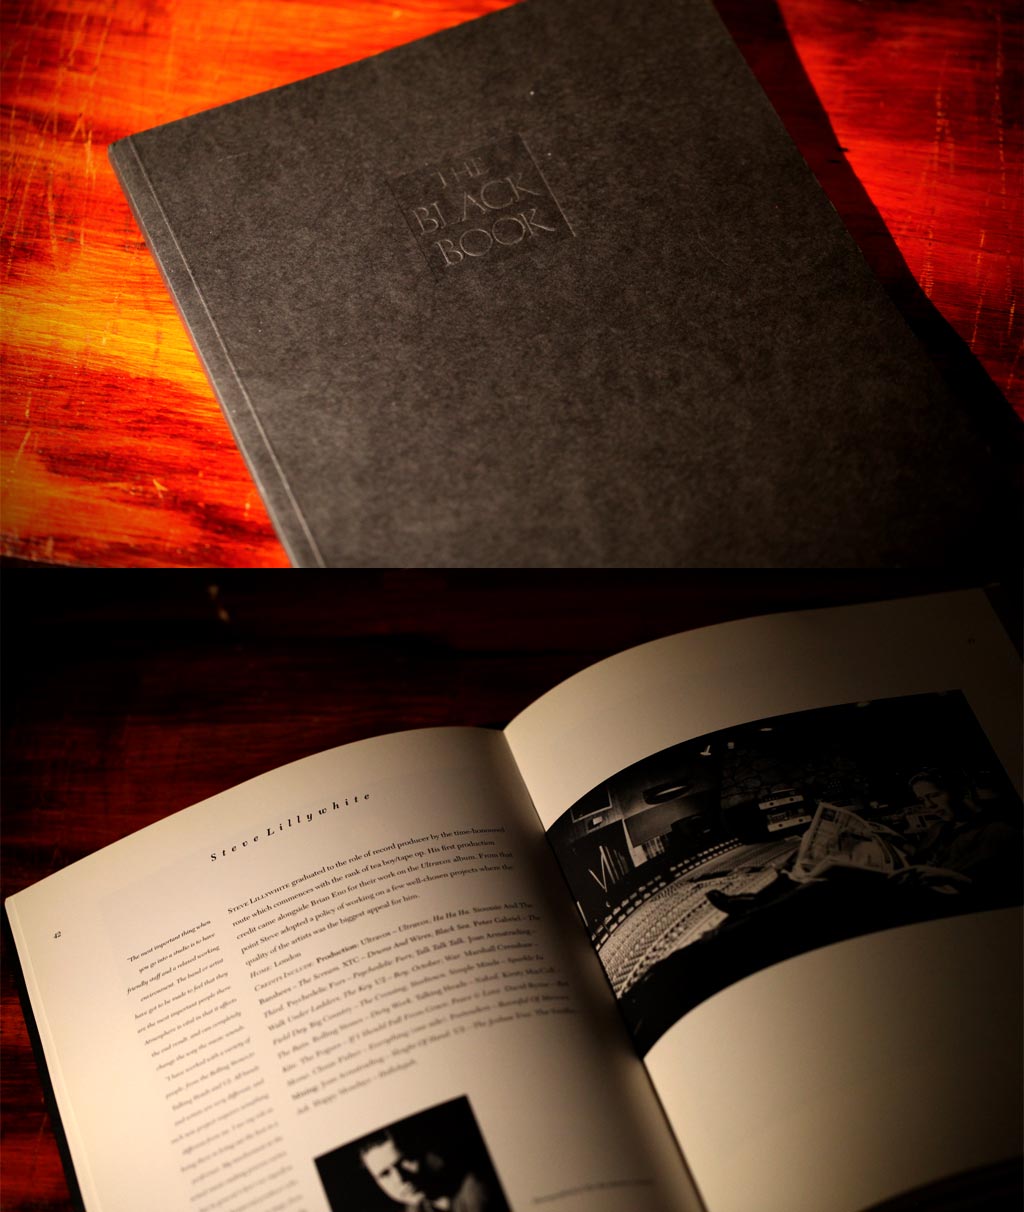 The black book by Colin G. Pringle